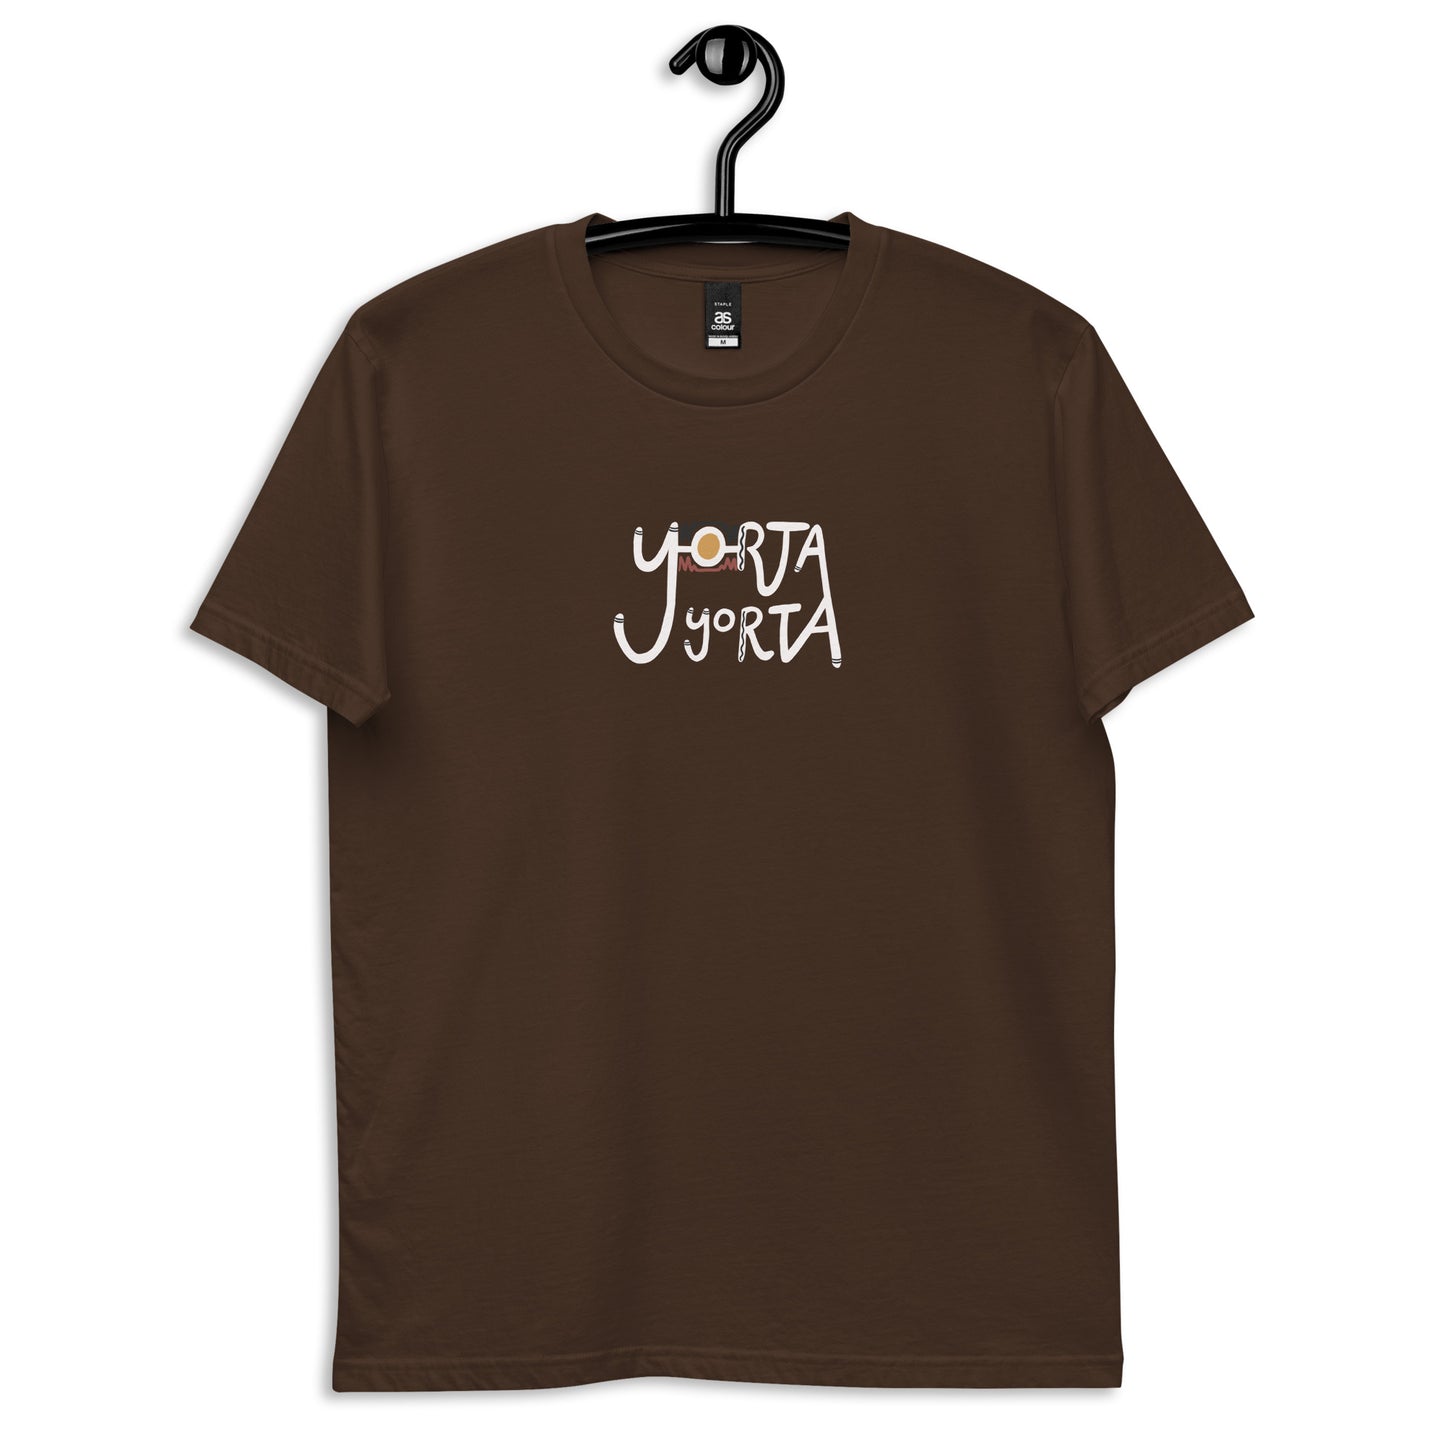 Yorta-Yorta Men's T-Shirt